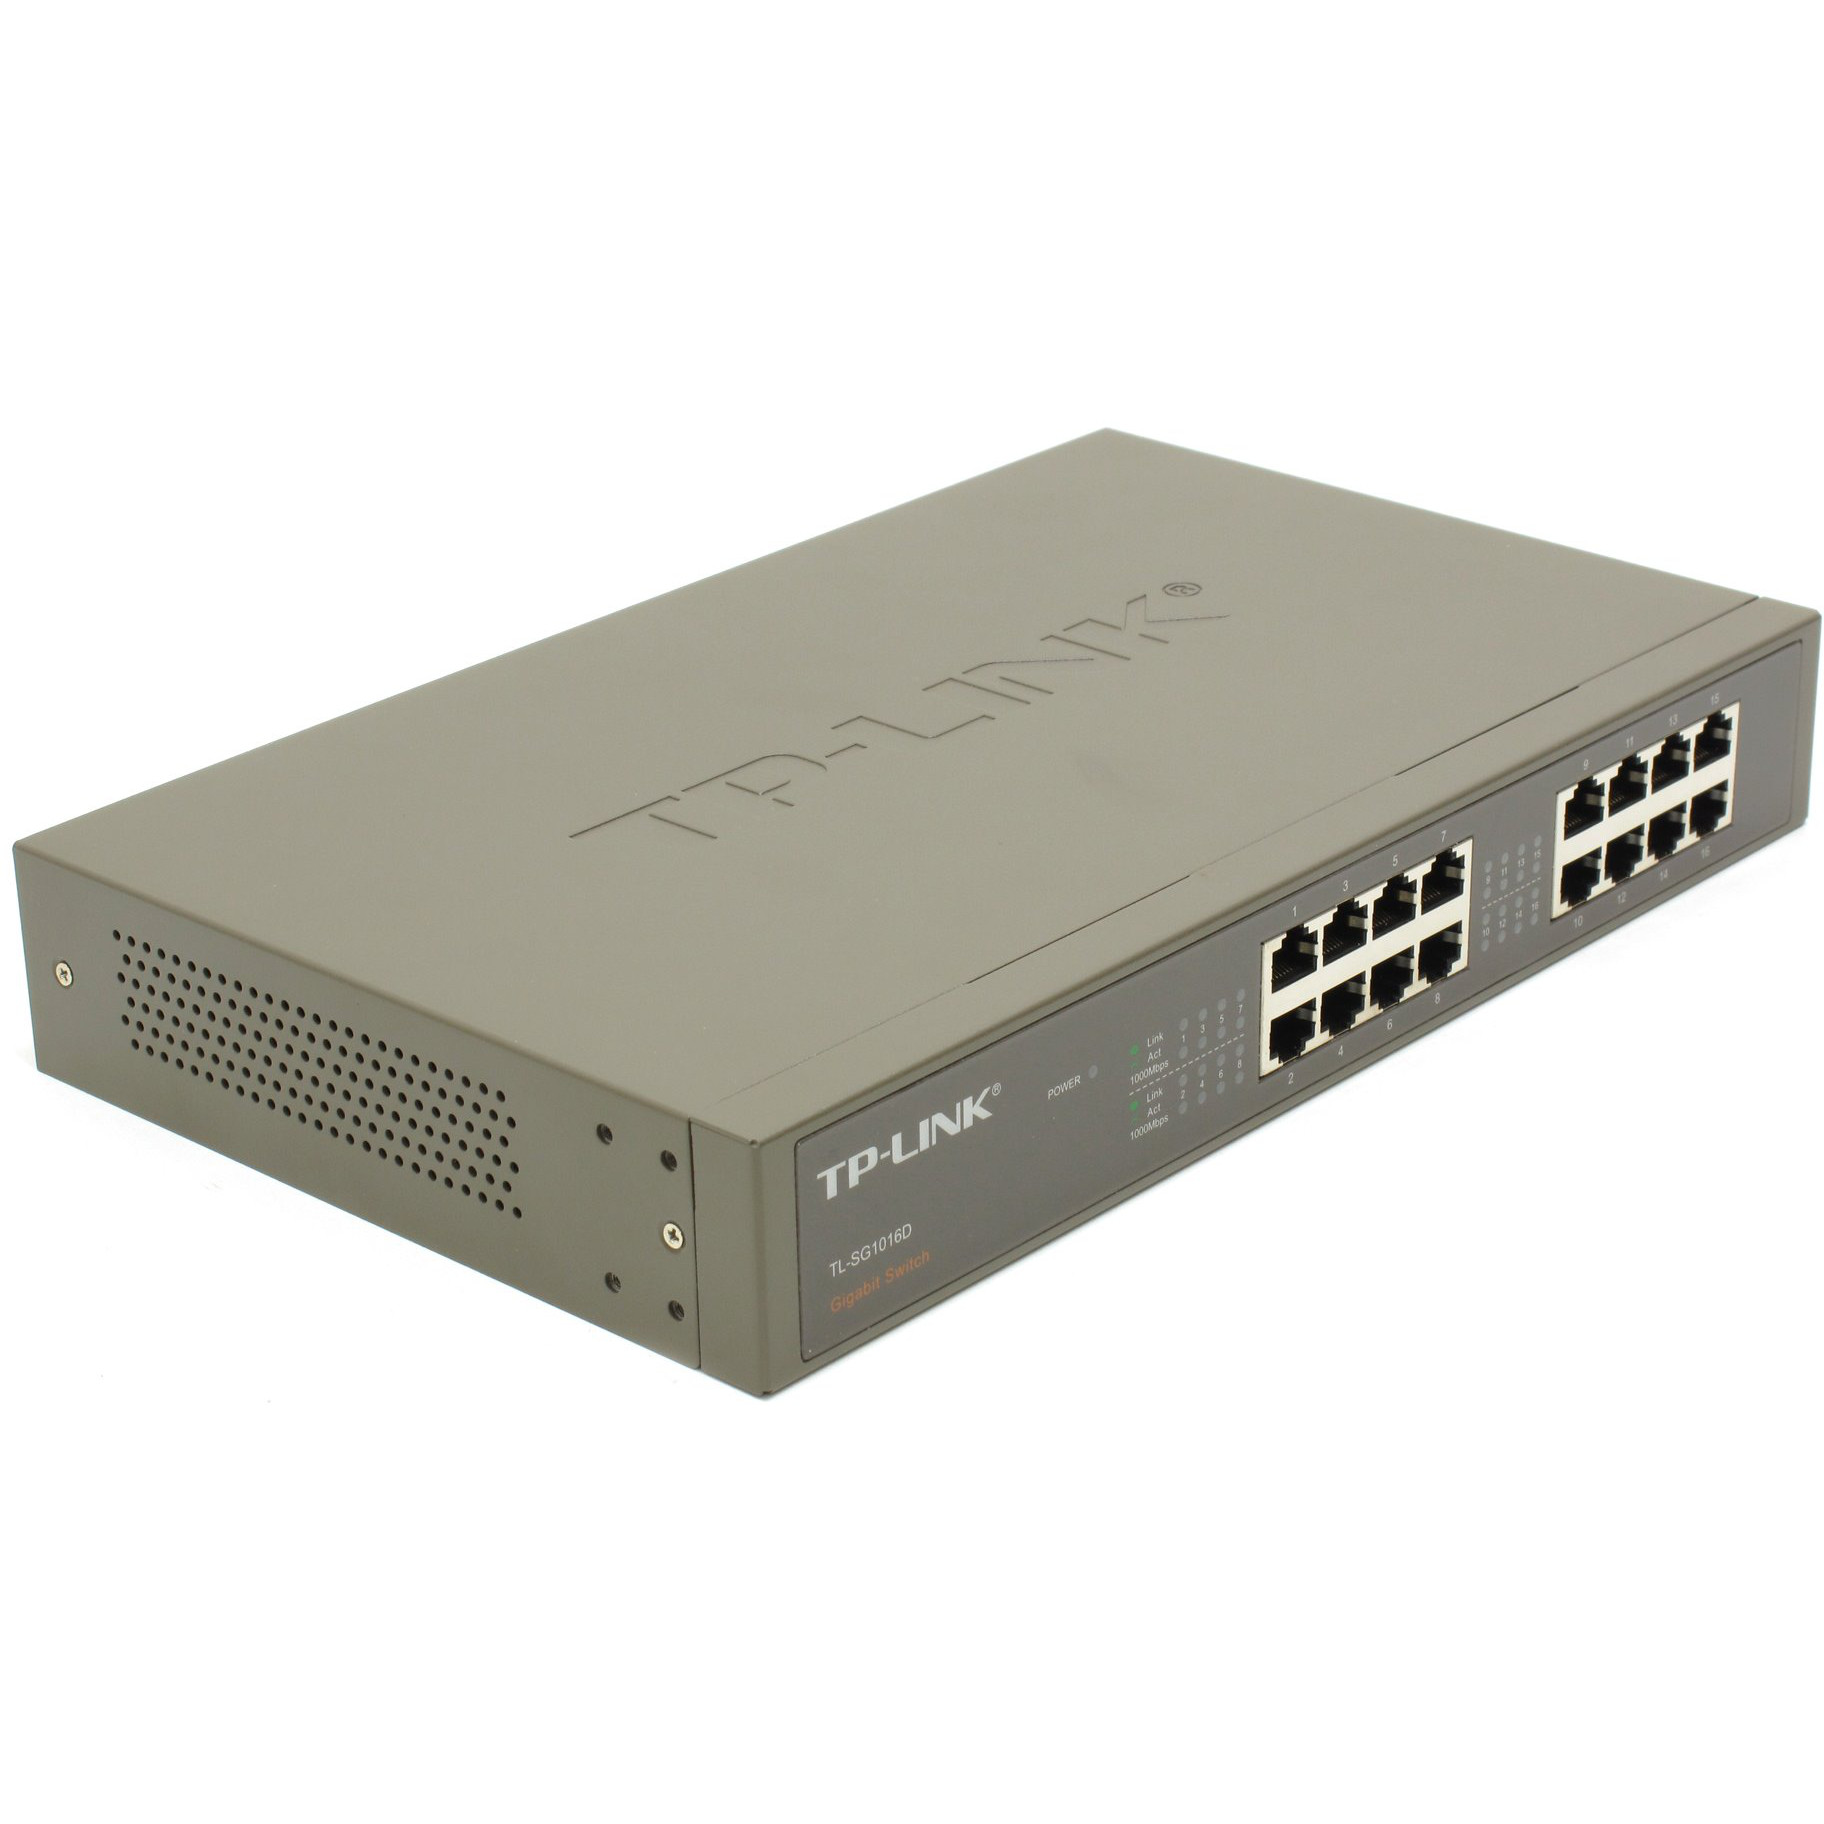  Switch TP-Link TL-SG1016D, 16 porturi, 10/100/1000 mb/s 